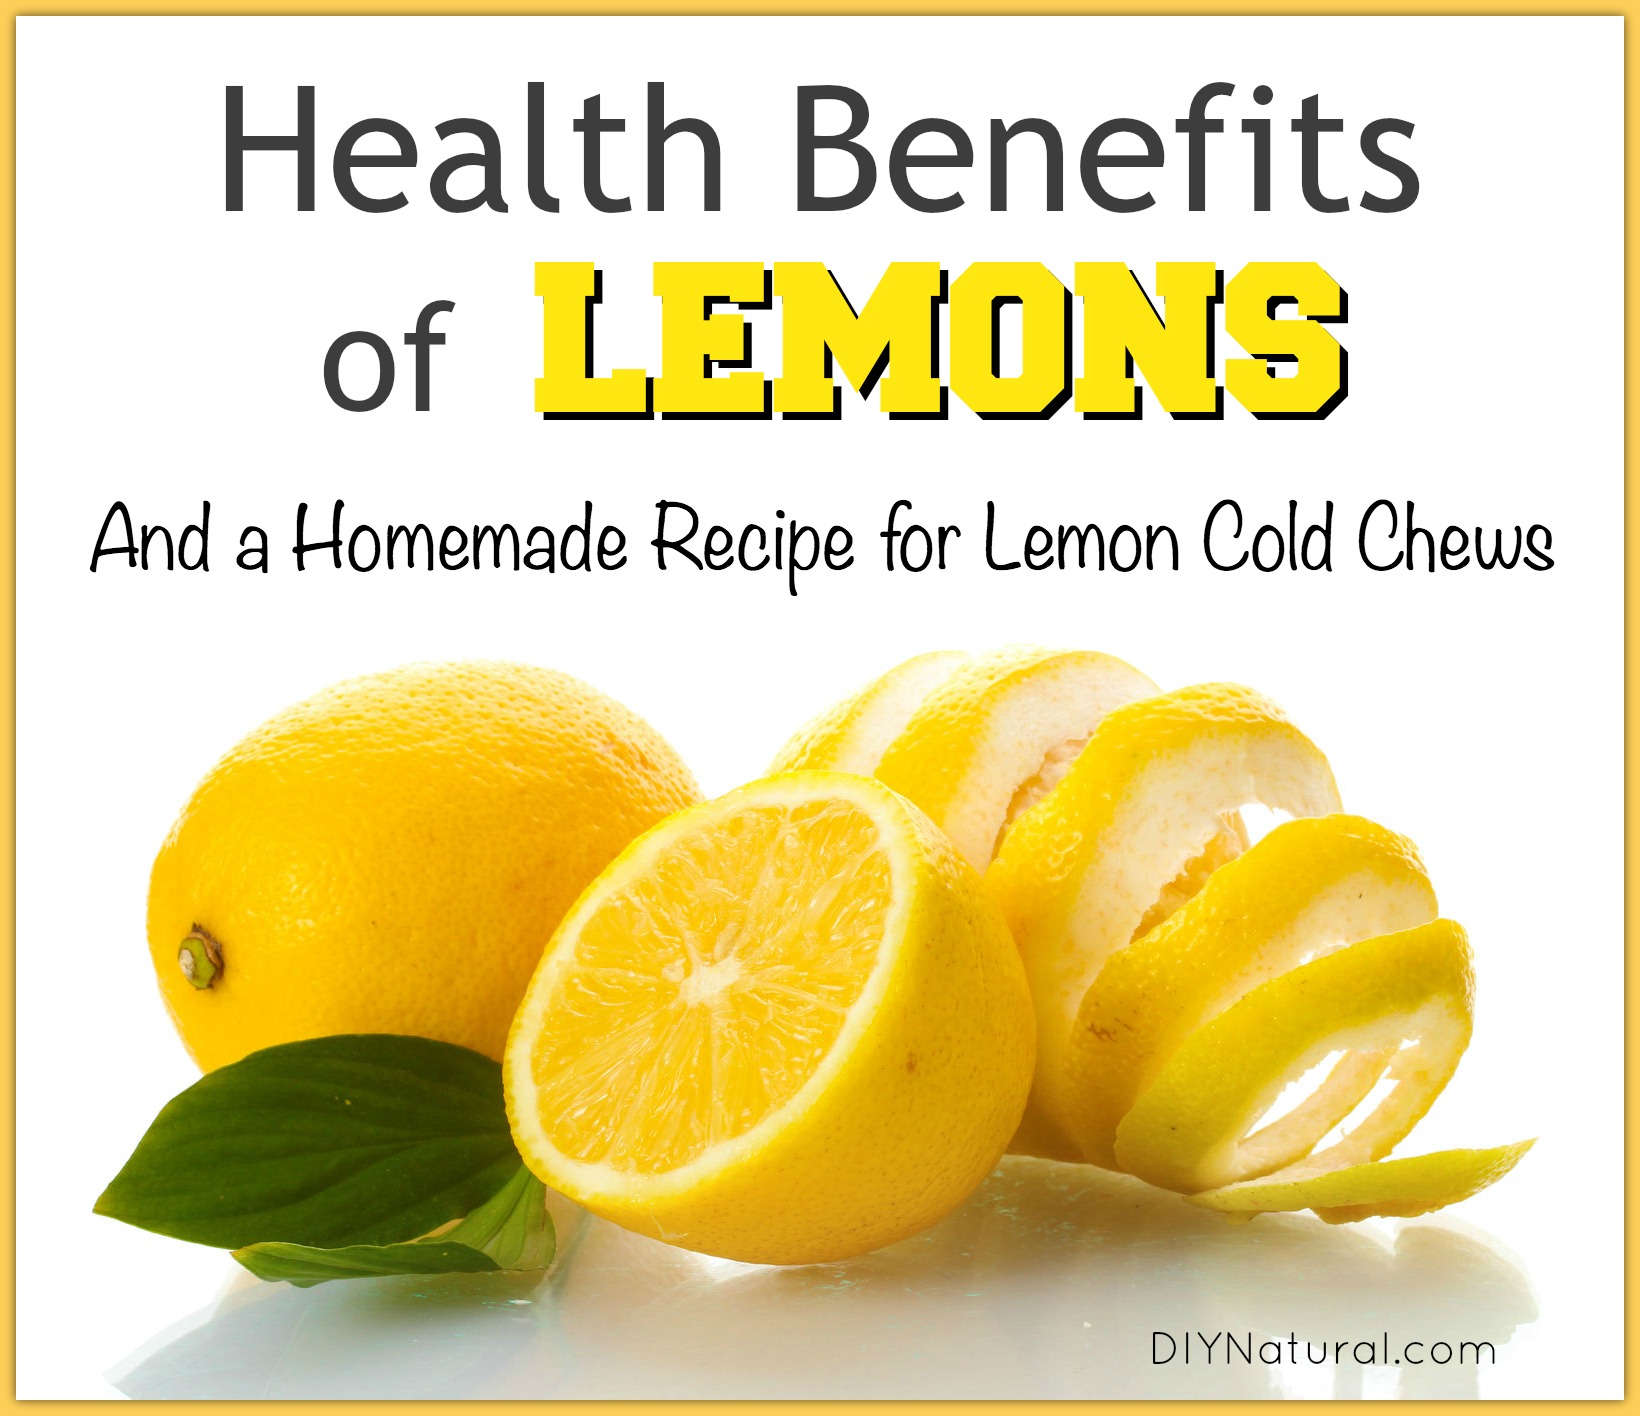 Health Benefits of Lemons & Homemade Lemon Cold Chews